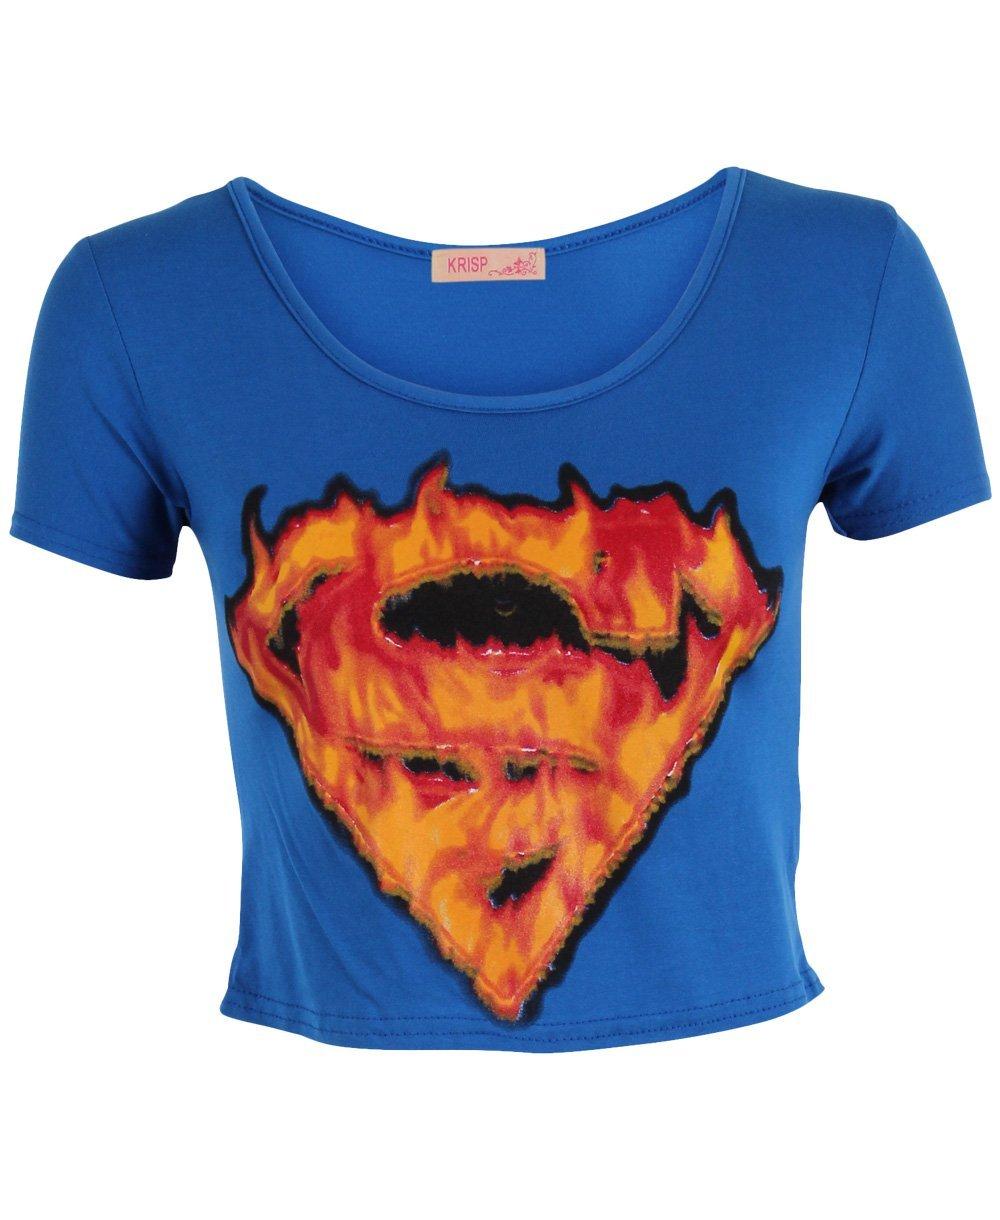 Foto KRISP Women's Flamed Logo Printed Superman Top